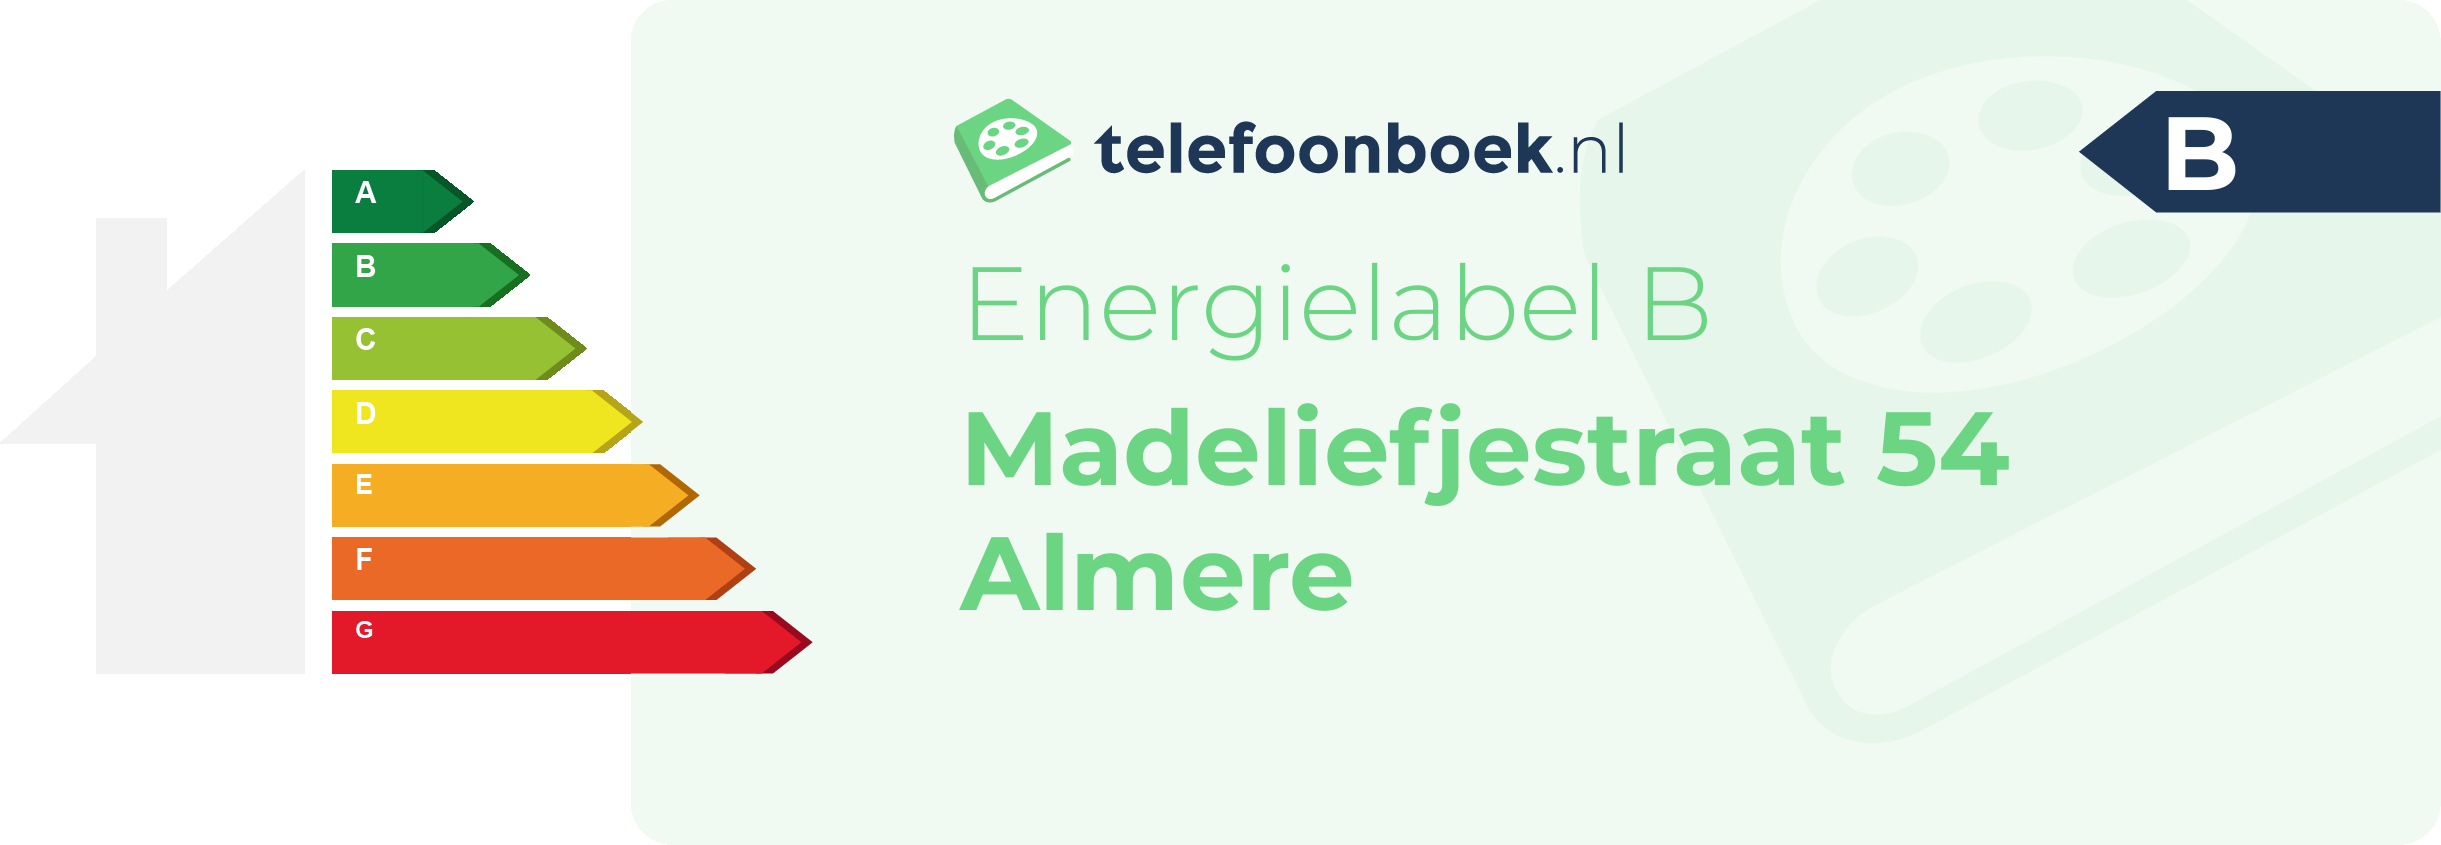 Energielabel Madeliefjestraat 54 Almere